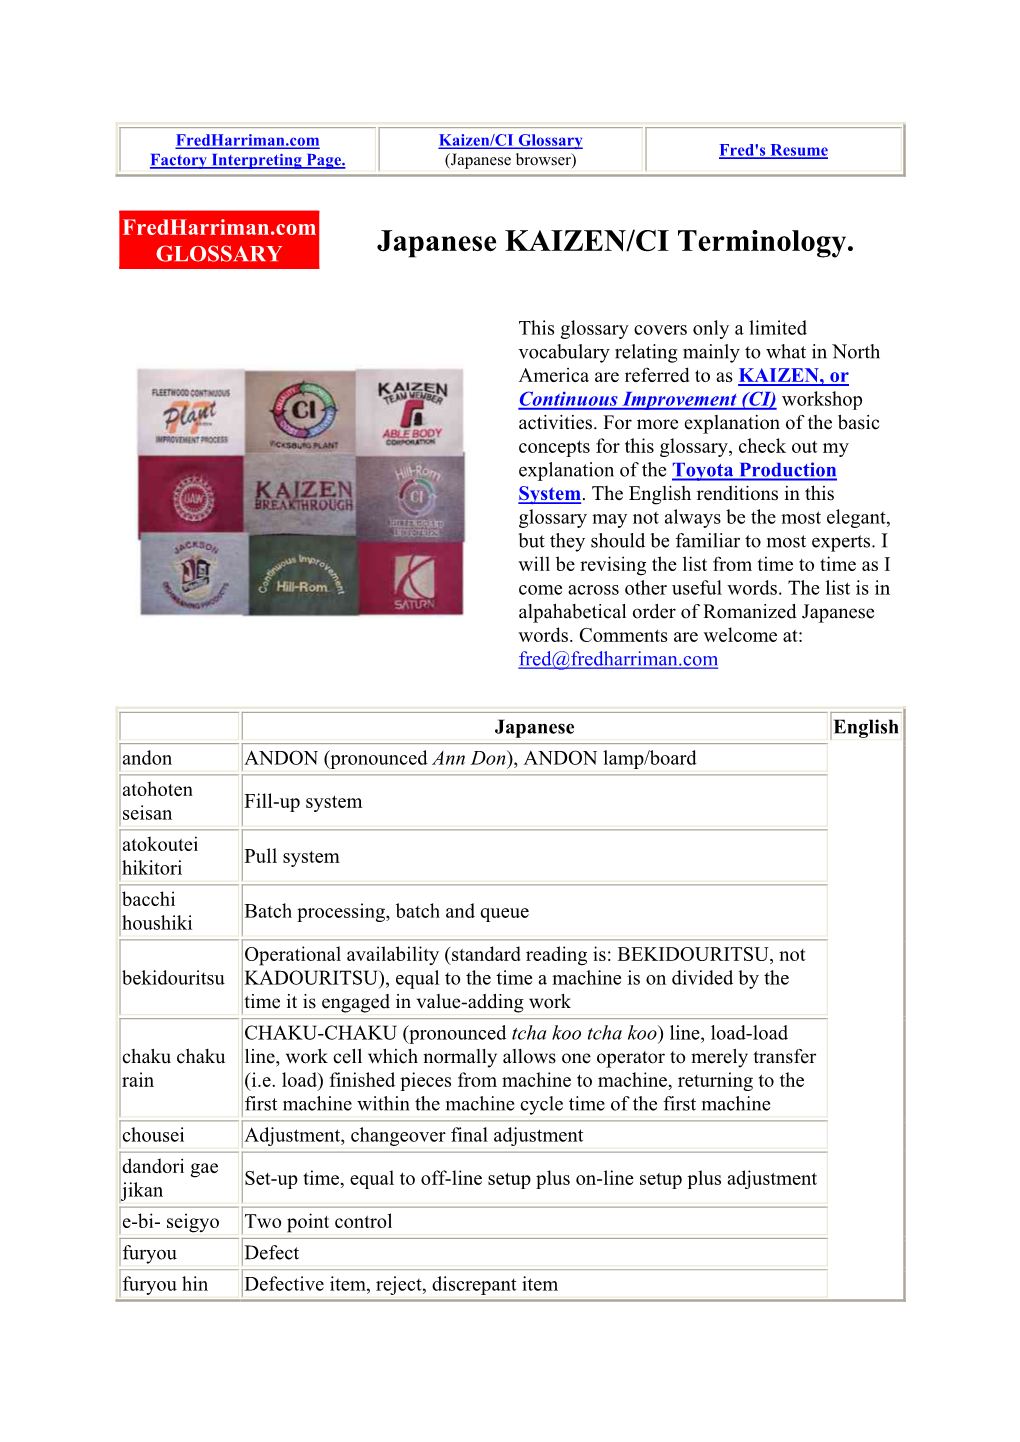 Japanese KAIZEN/CI Terminology